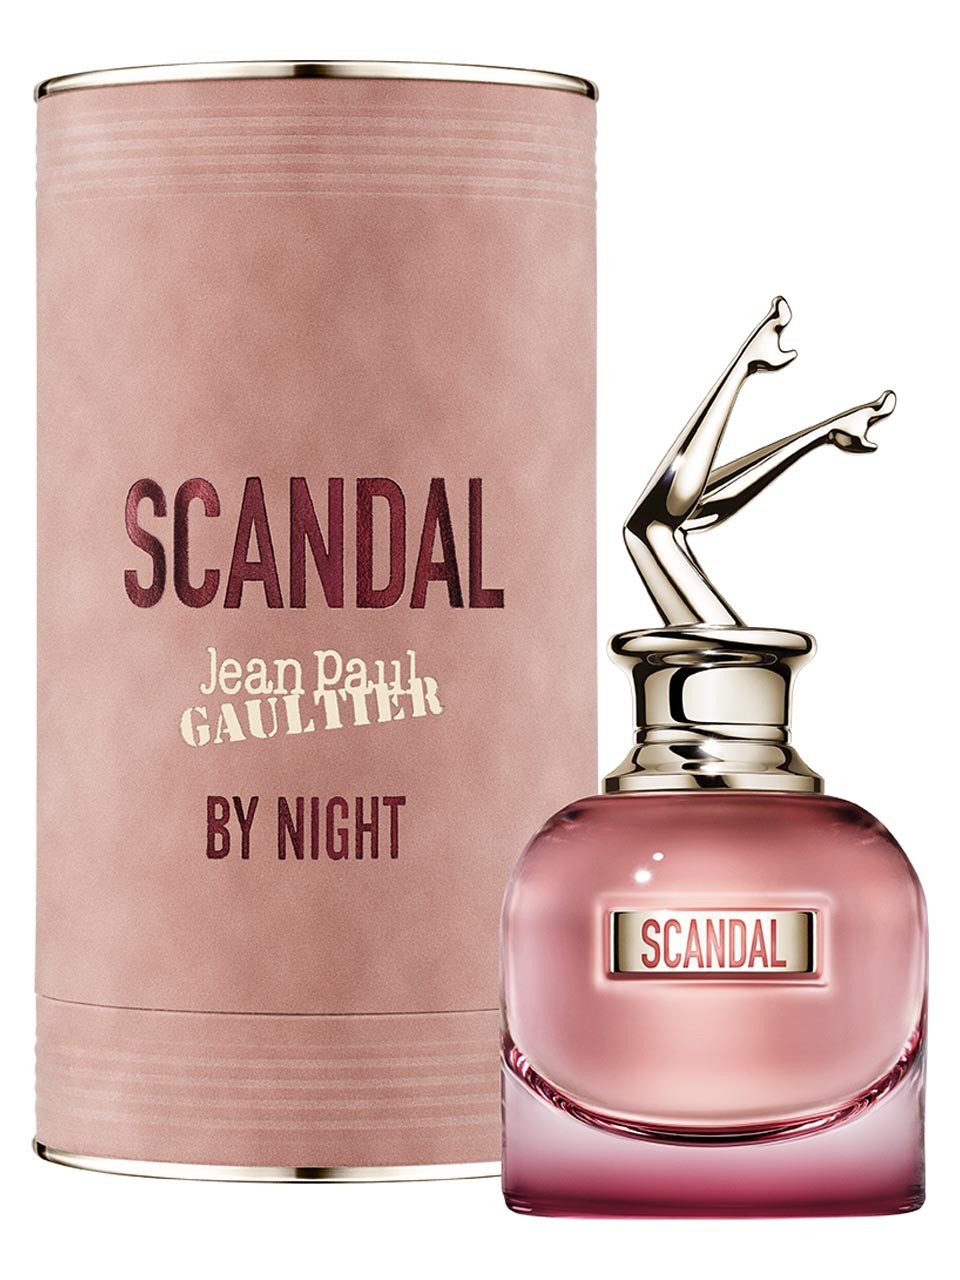 Parfum Scandal - Homecare24